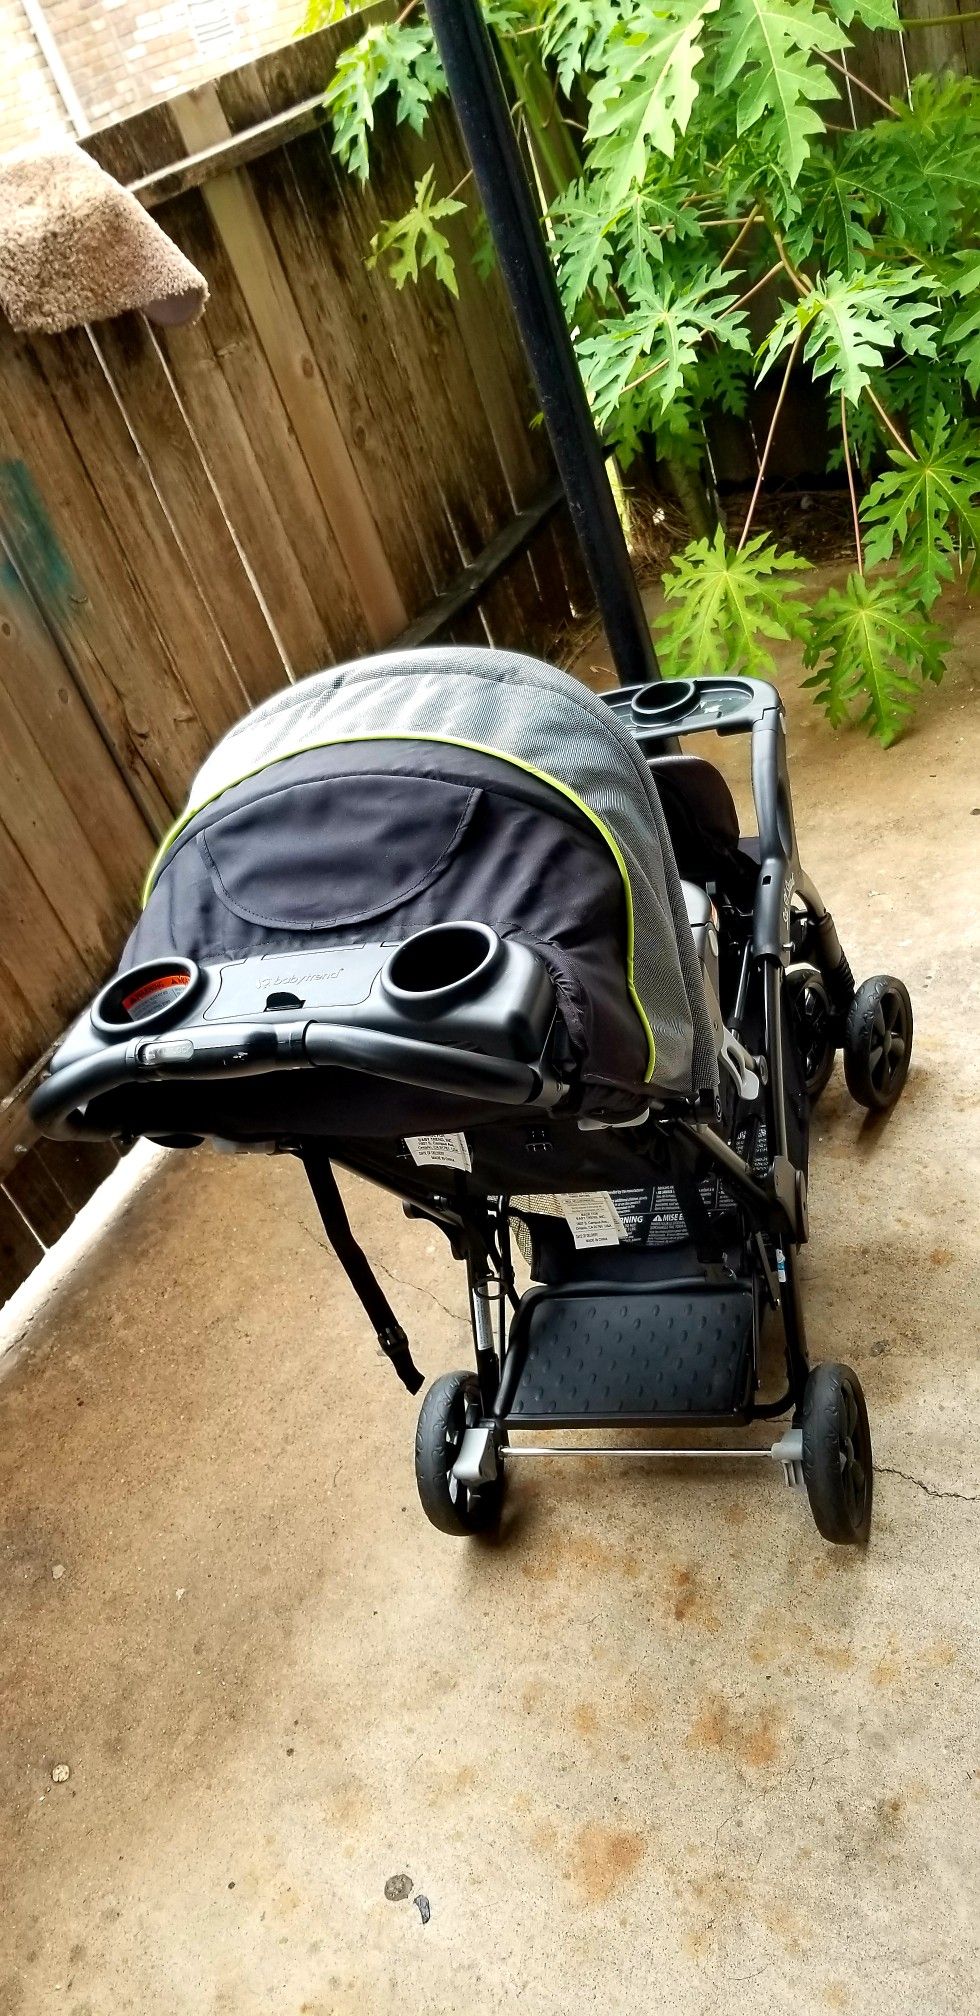 Baby Trend Snap-N-Go Double Stroller